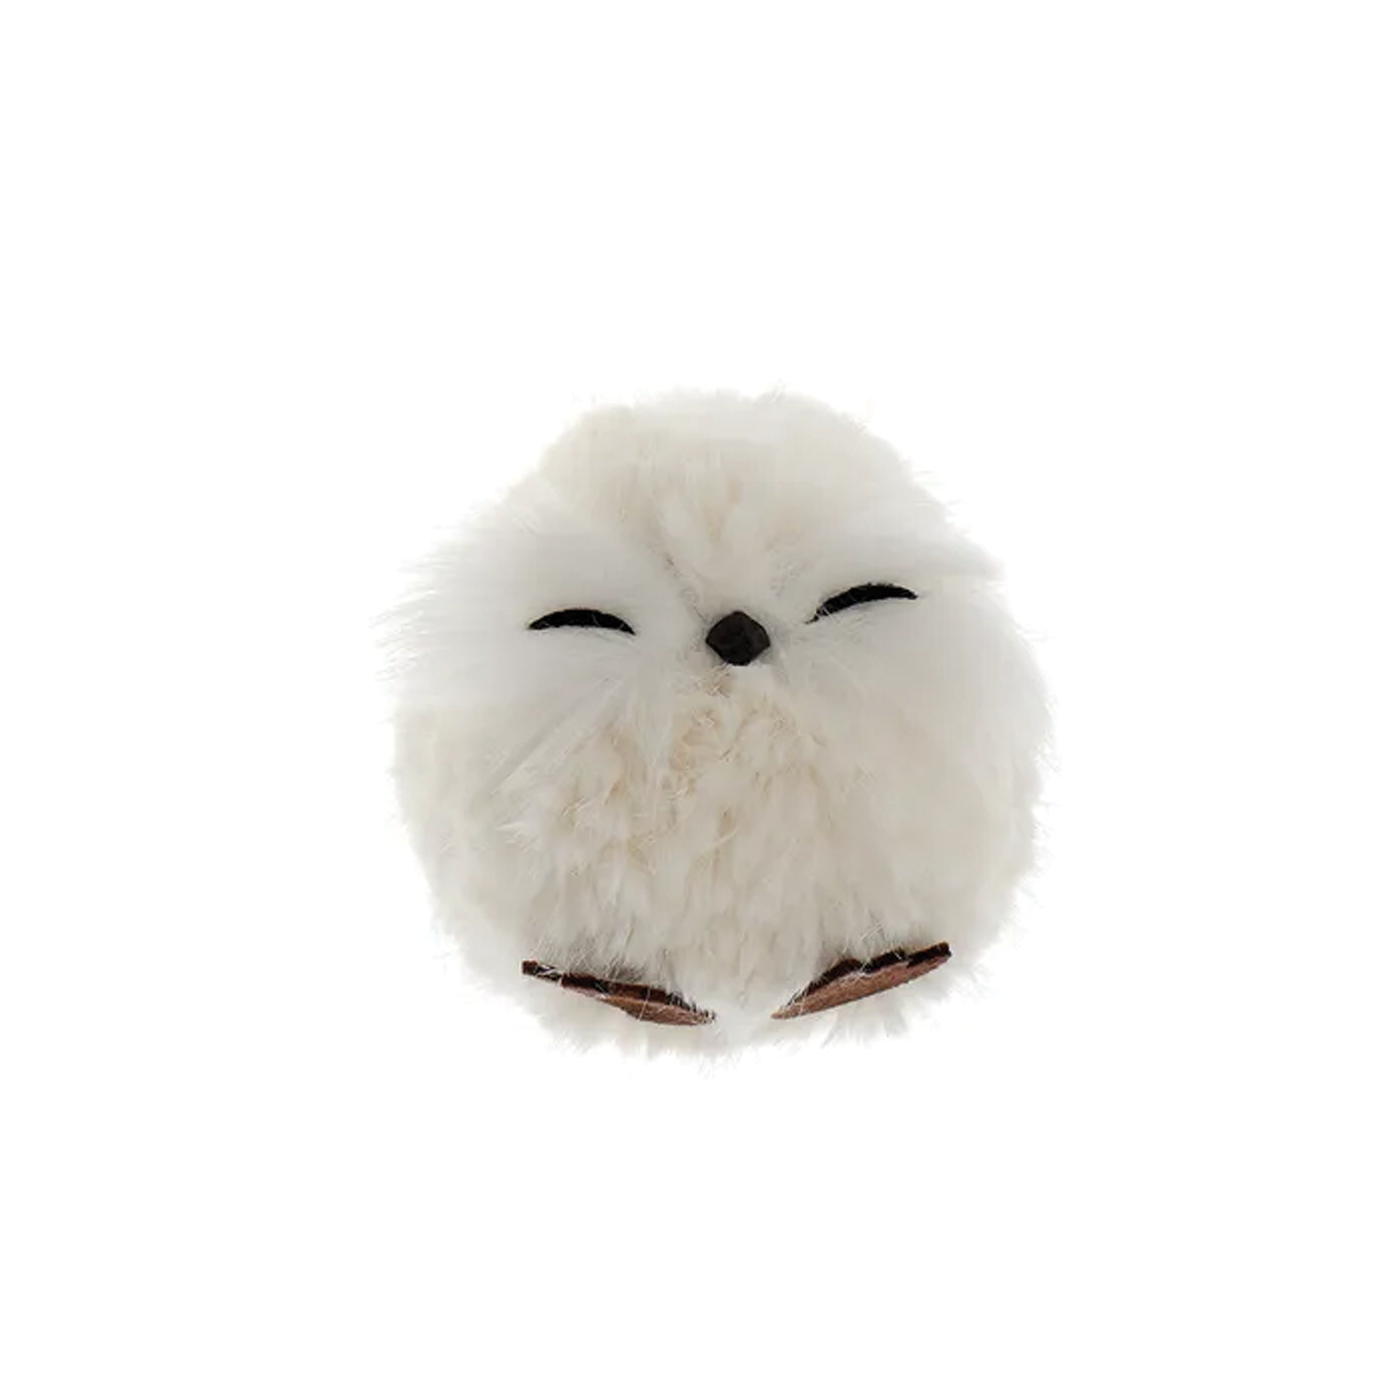 White Fluffy Owl Ornament - Asleep